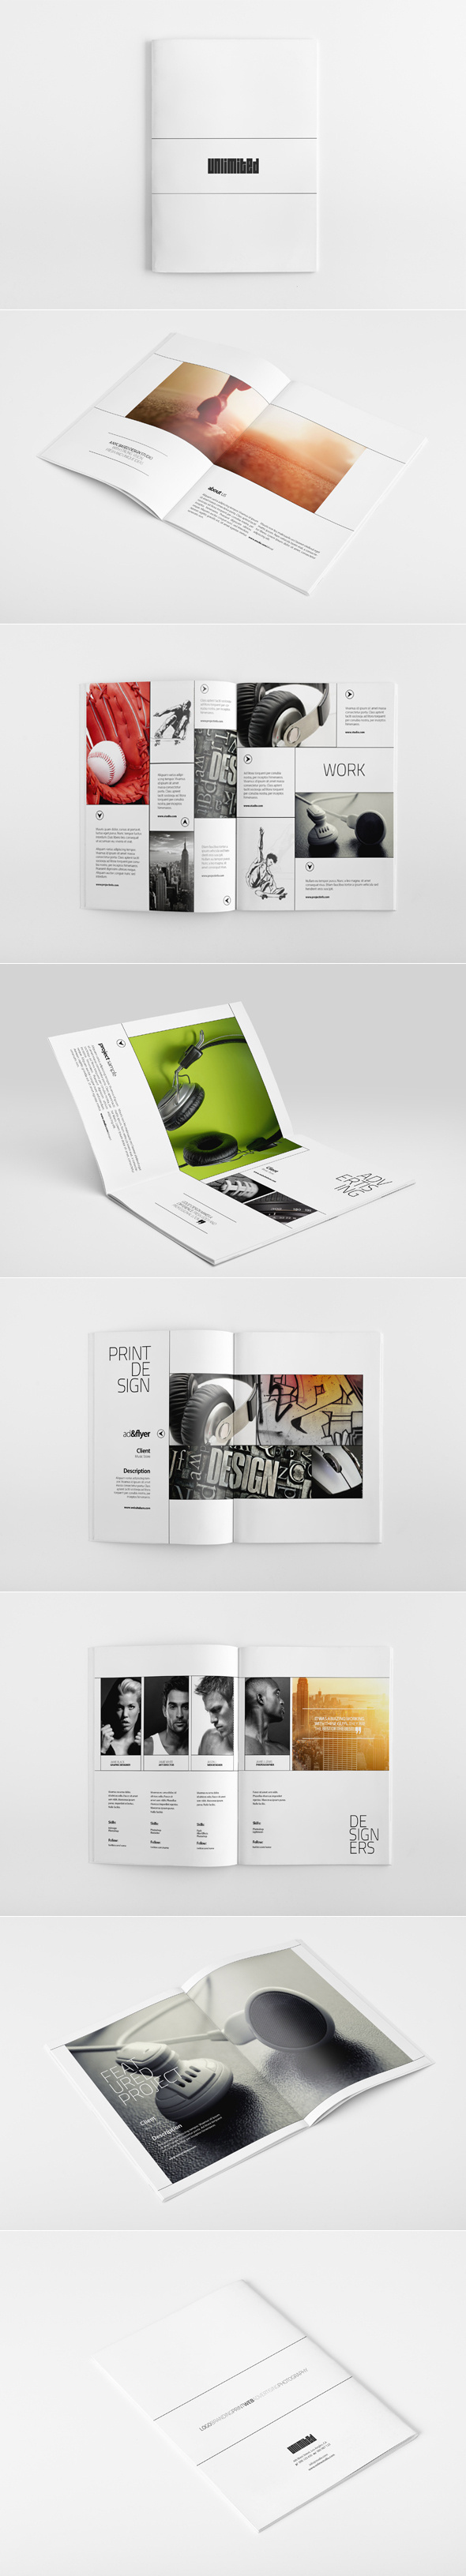 Brochure design idea #28: Unlimited Portfolio #brochure